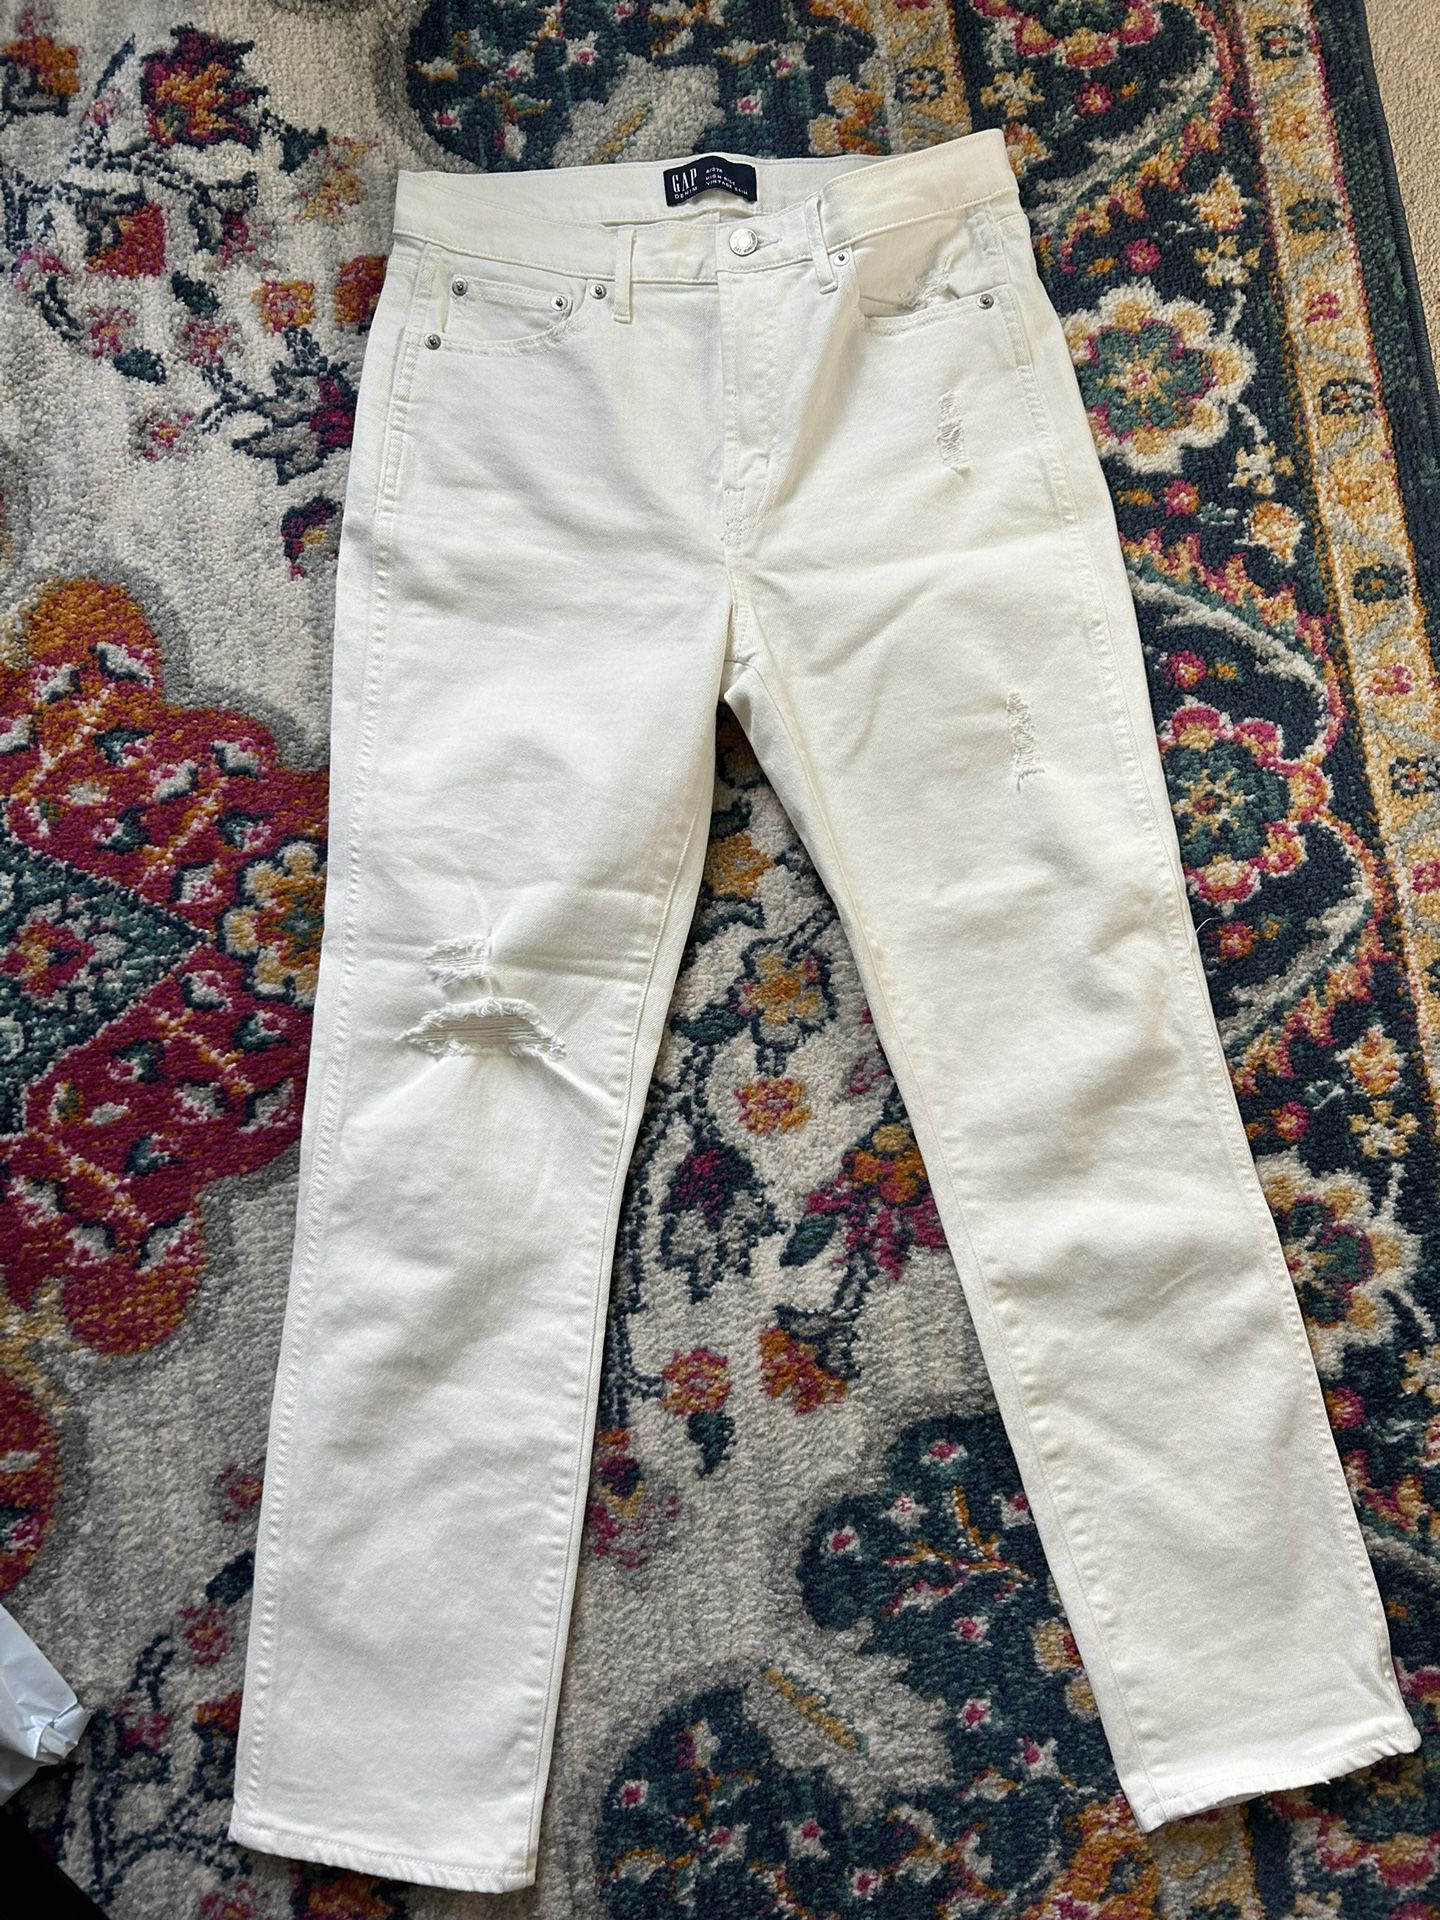 Gap White Jeans